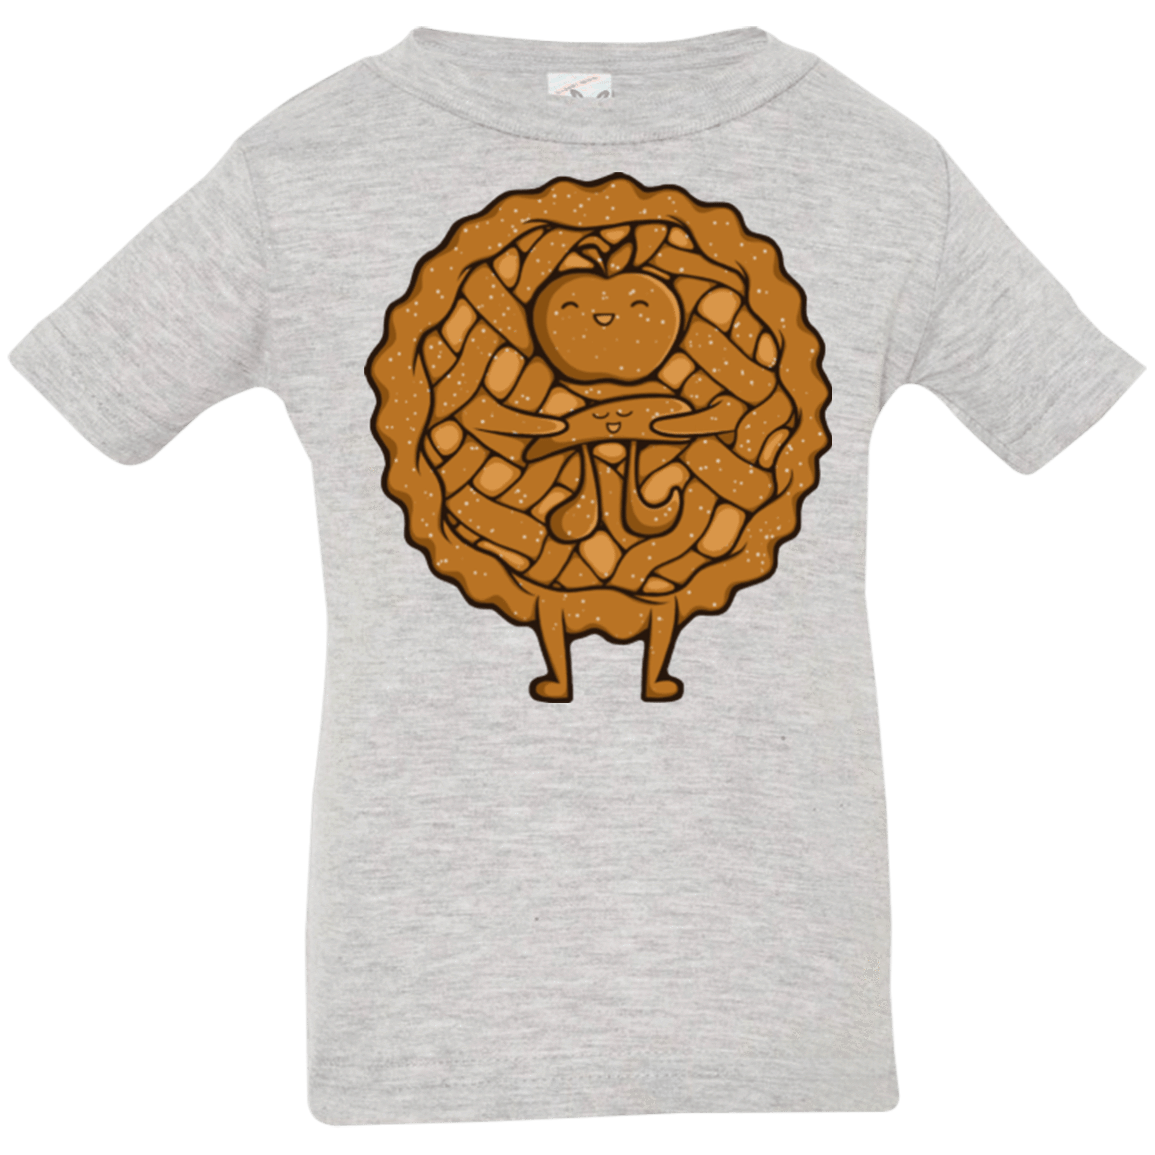 T-Shirts Heather / 6 Months Apple Pie Infant Premium T-Shirt